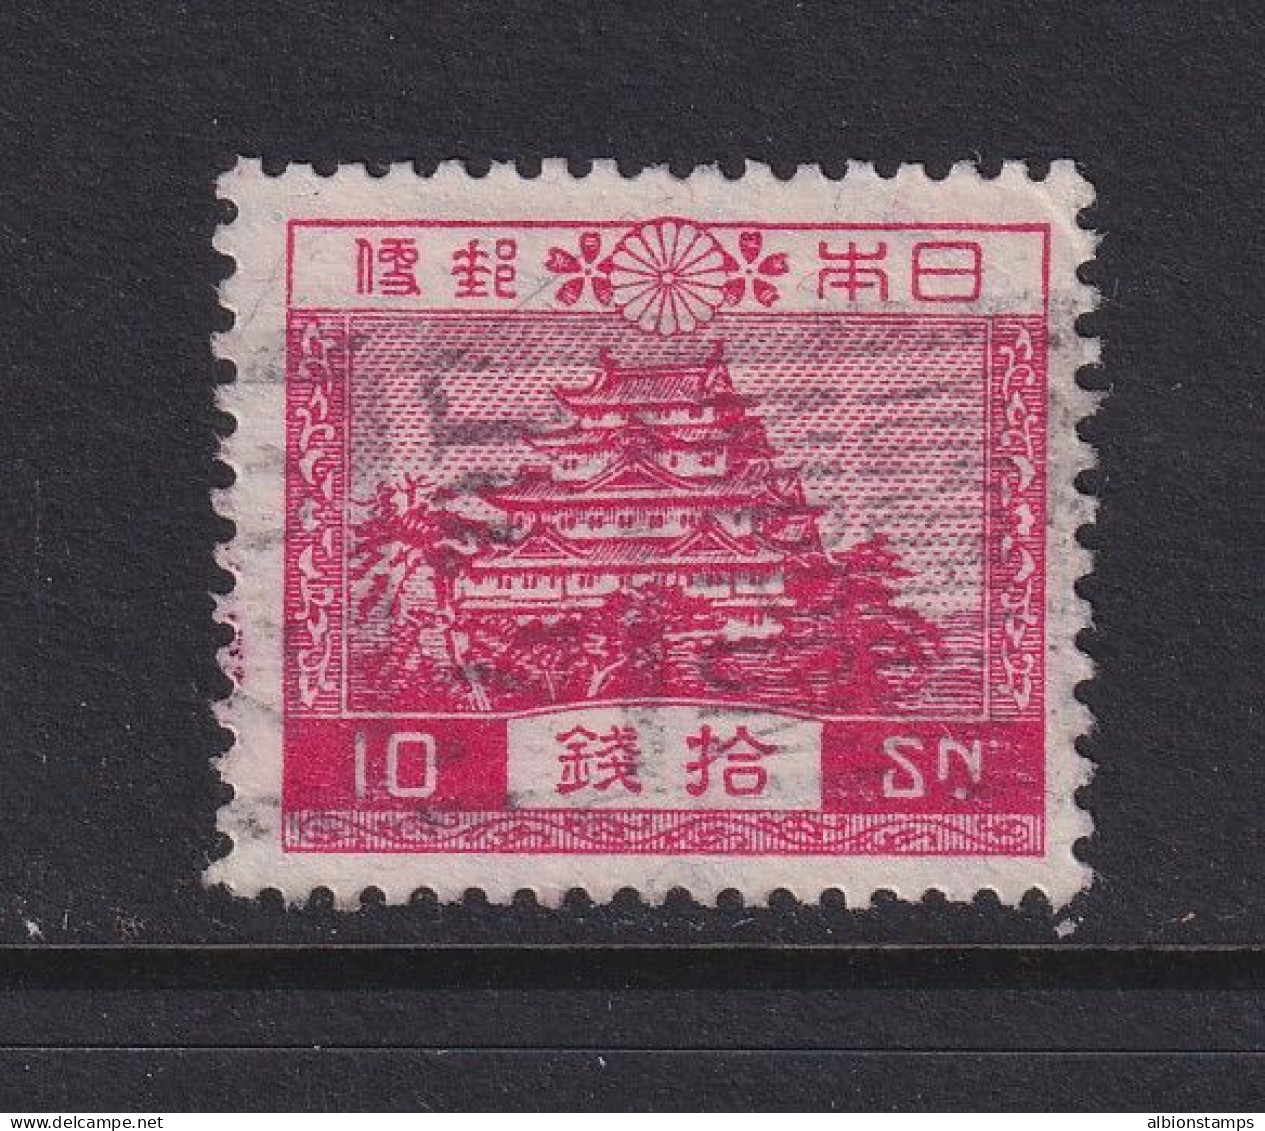 Japan, Scott 197, Used - Used Stamps